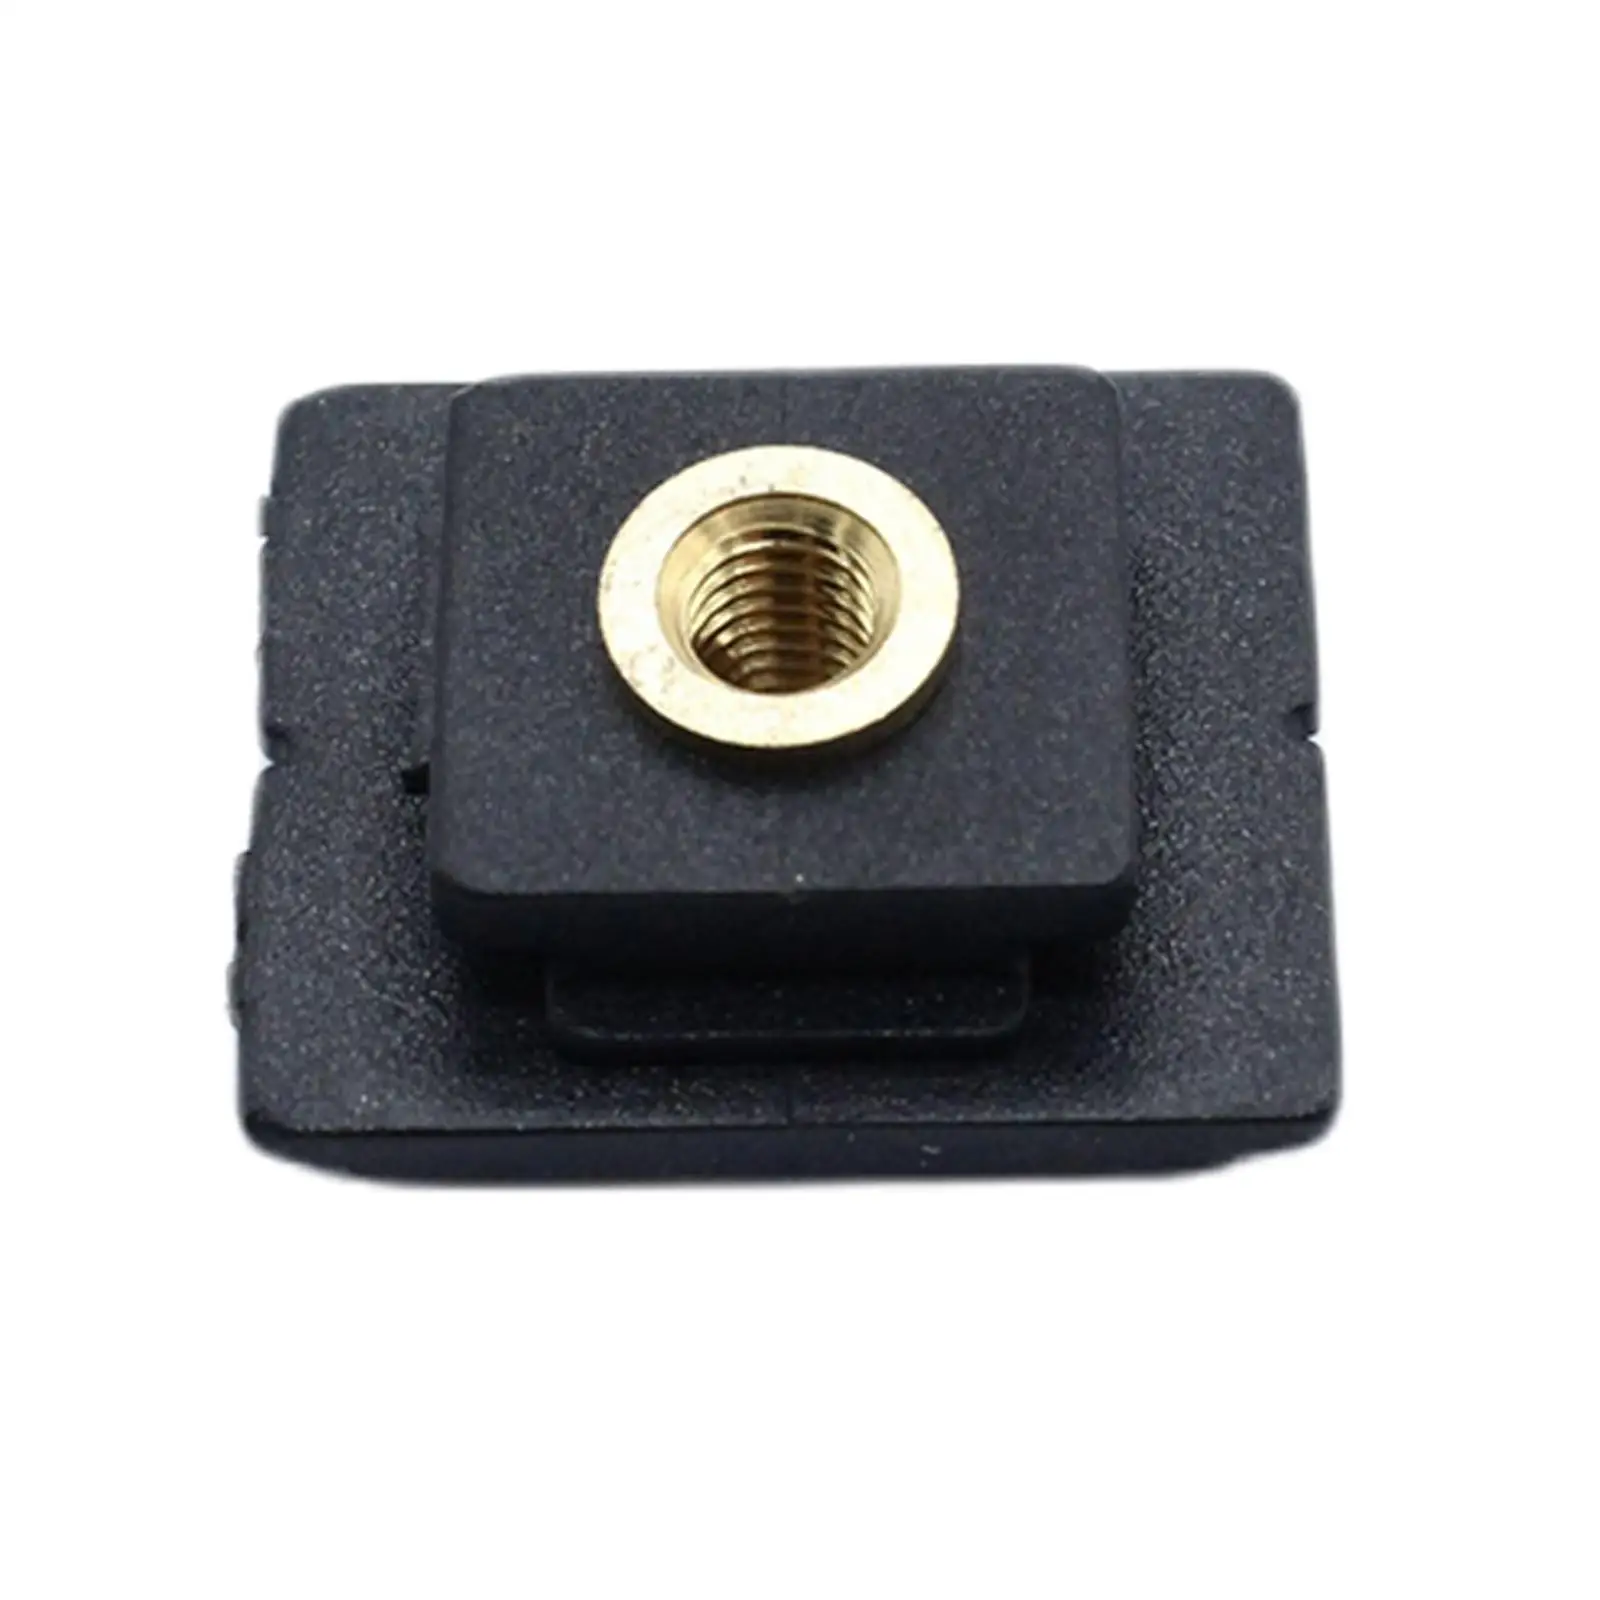 Automotive Headlight Mounting Nut Clip 63122752224 for Mini R58 Coupe R59 Accessories Repair Wearproof Premium